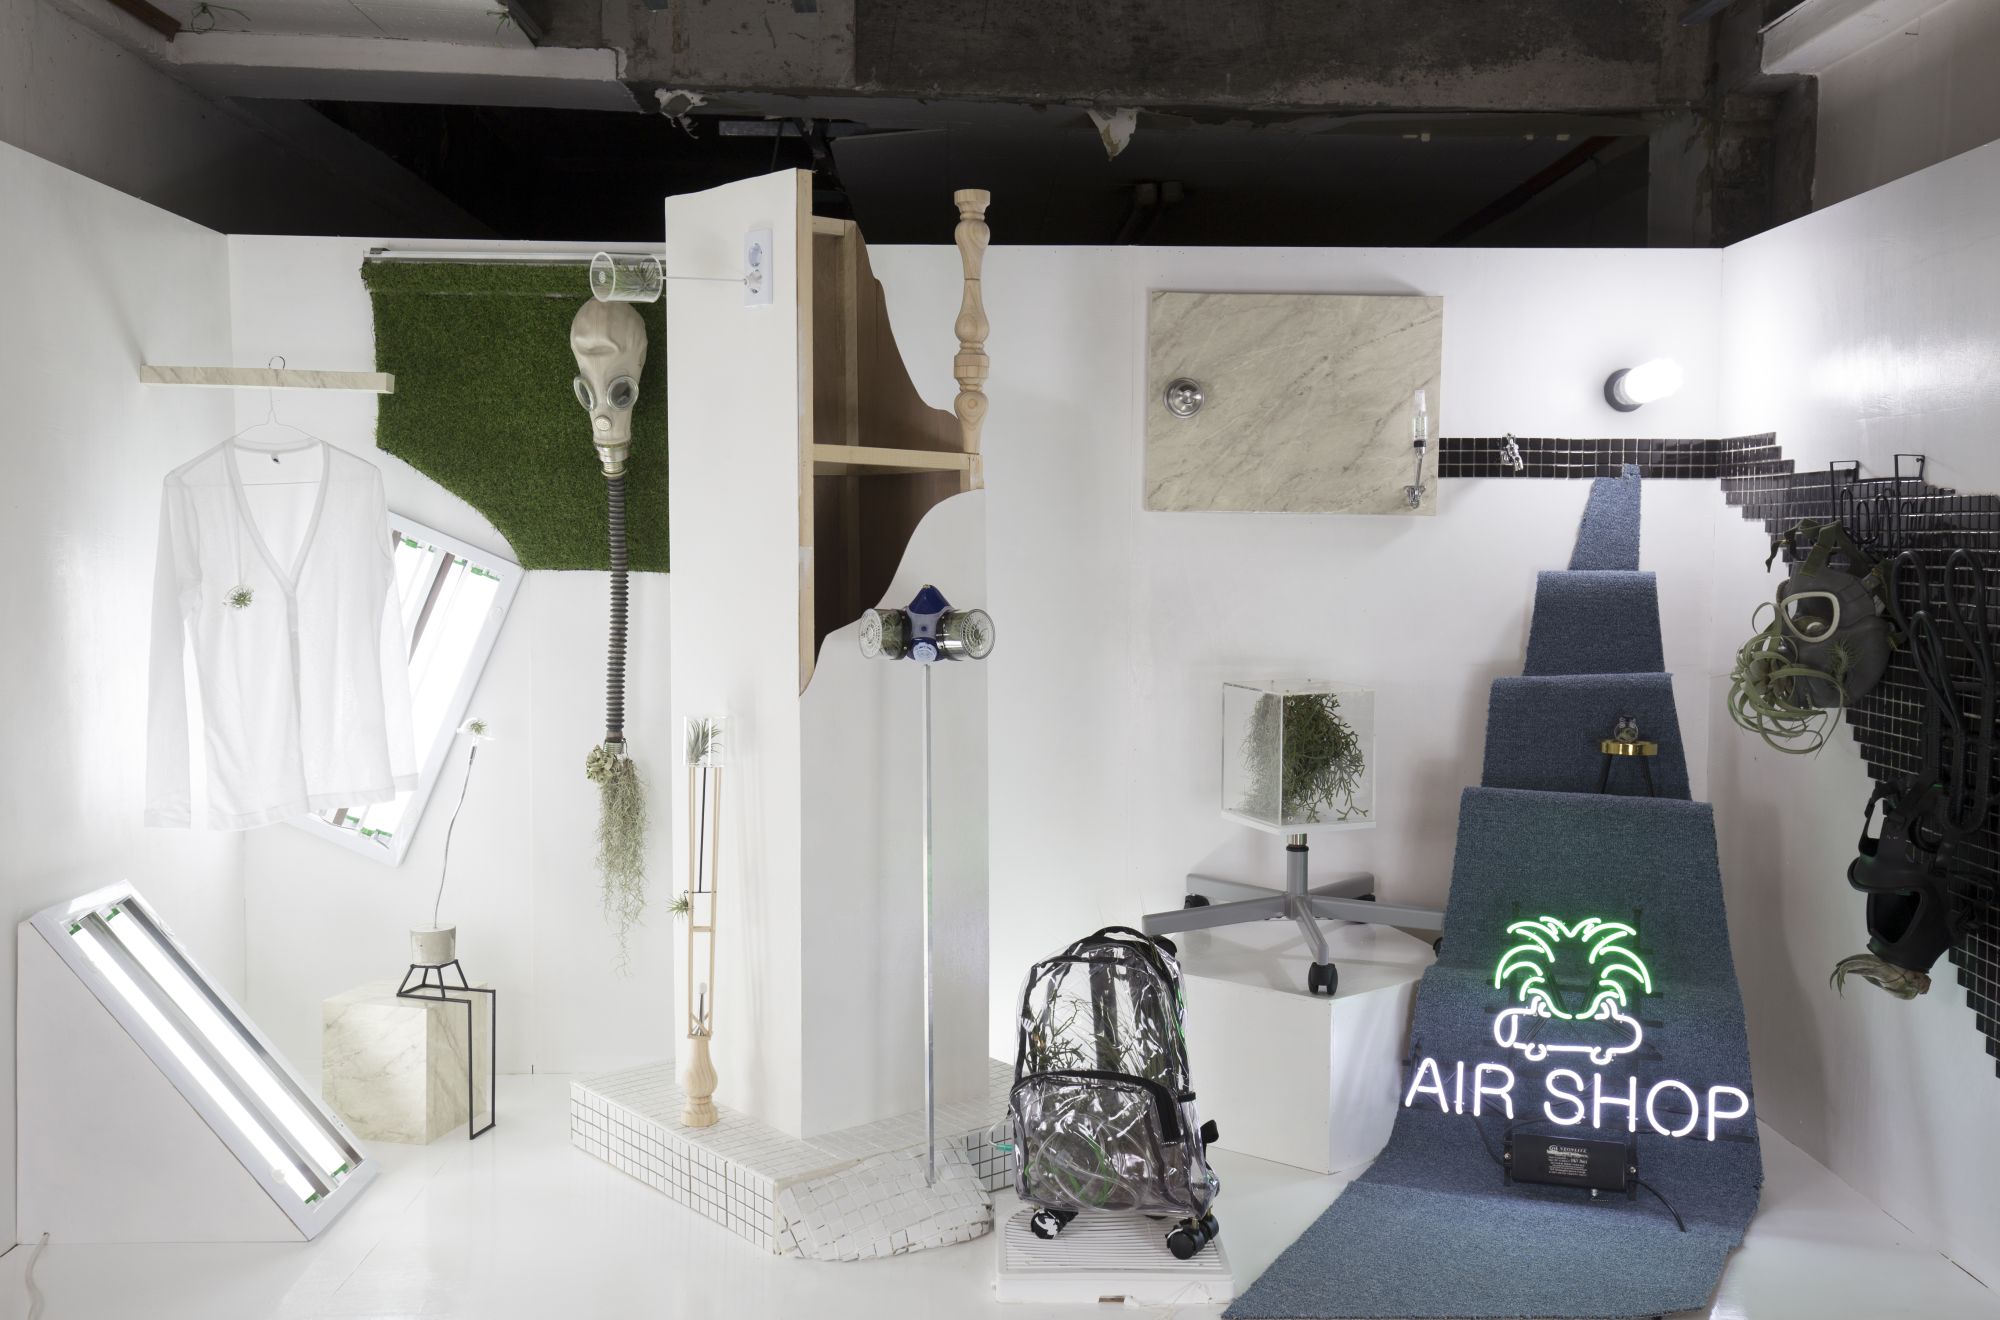 AIR SHOP : 식물 마스크 시리즈, AIR SHOP : Plant Mask Project